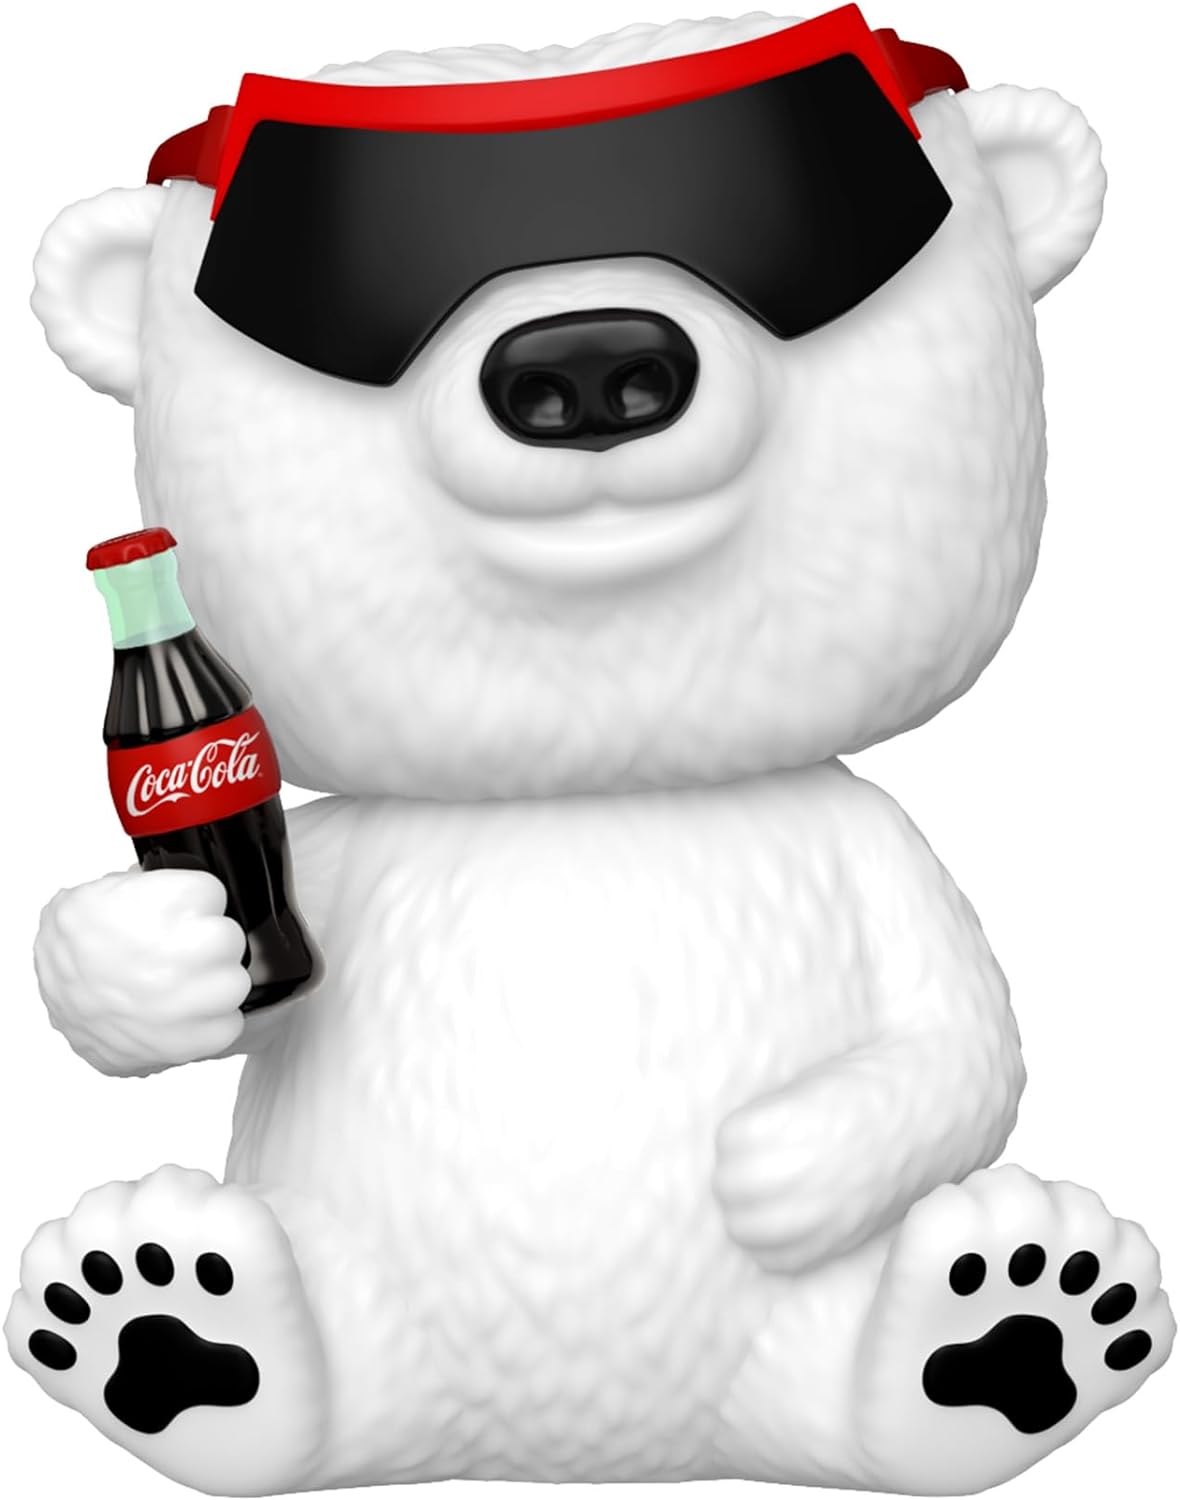 Figurine Vinyl FUNKO POP Ad Icons : 90s Coca-Cola Polar Bear #158